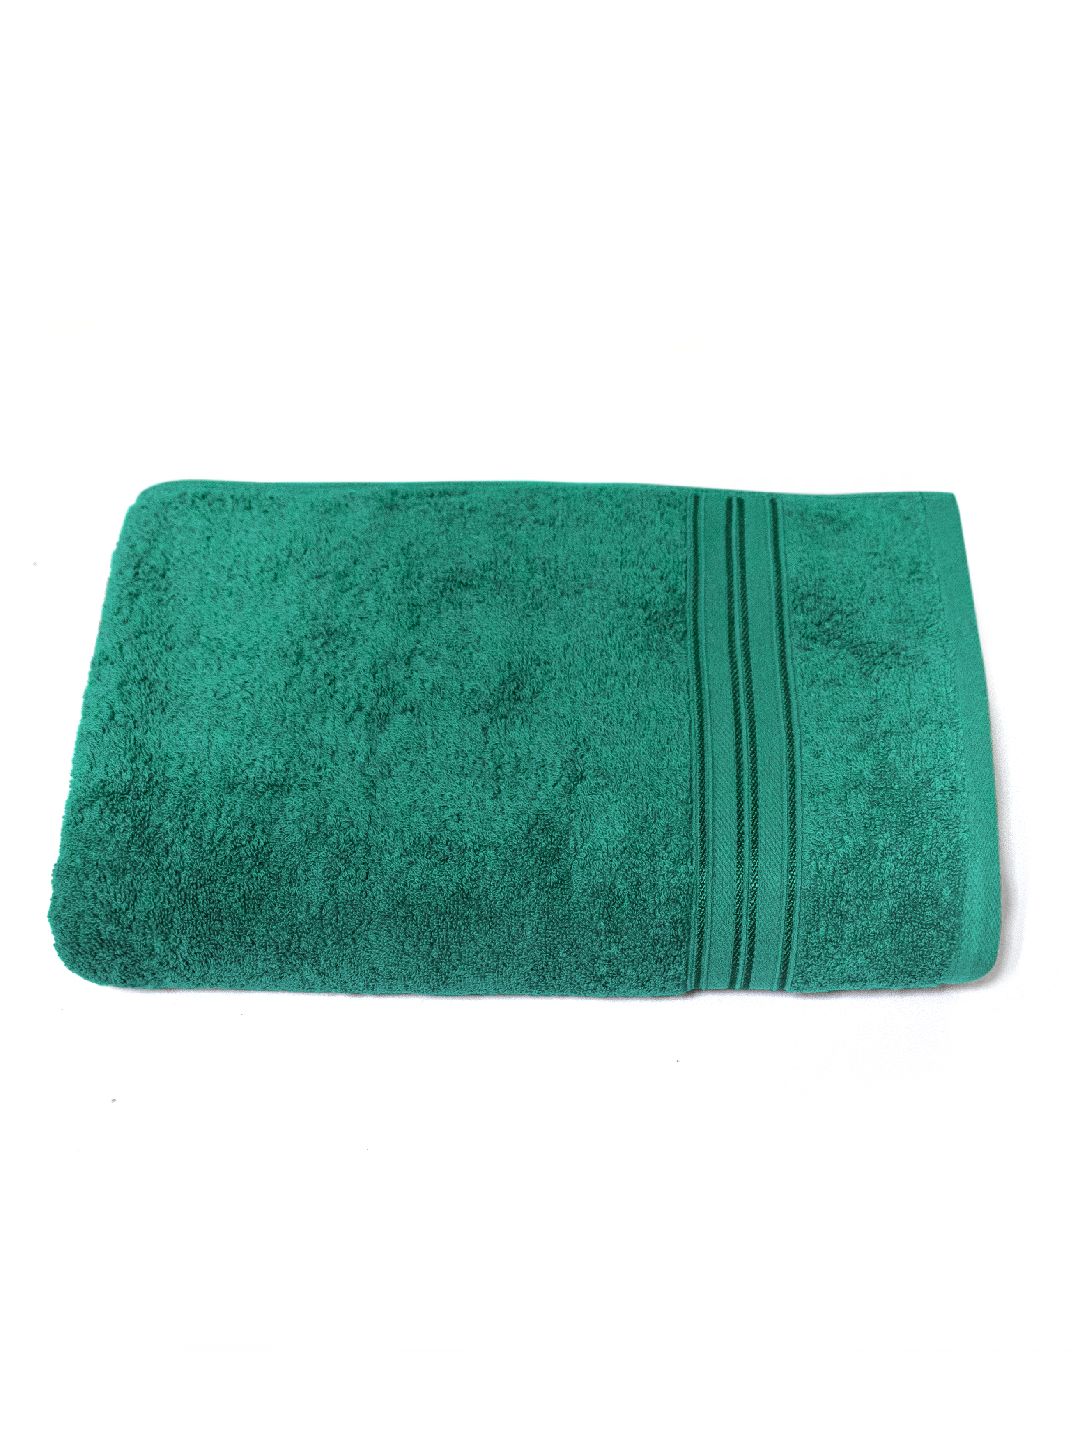 swiss republic Green Cotton 600 GSM Bath Towel Price in India